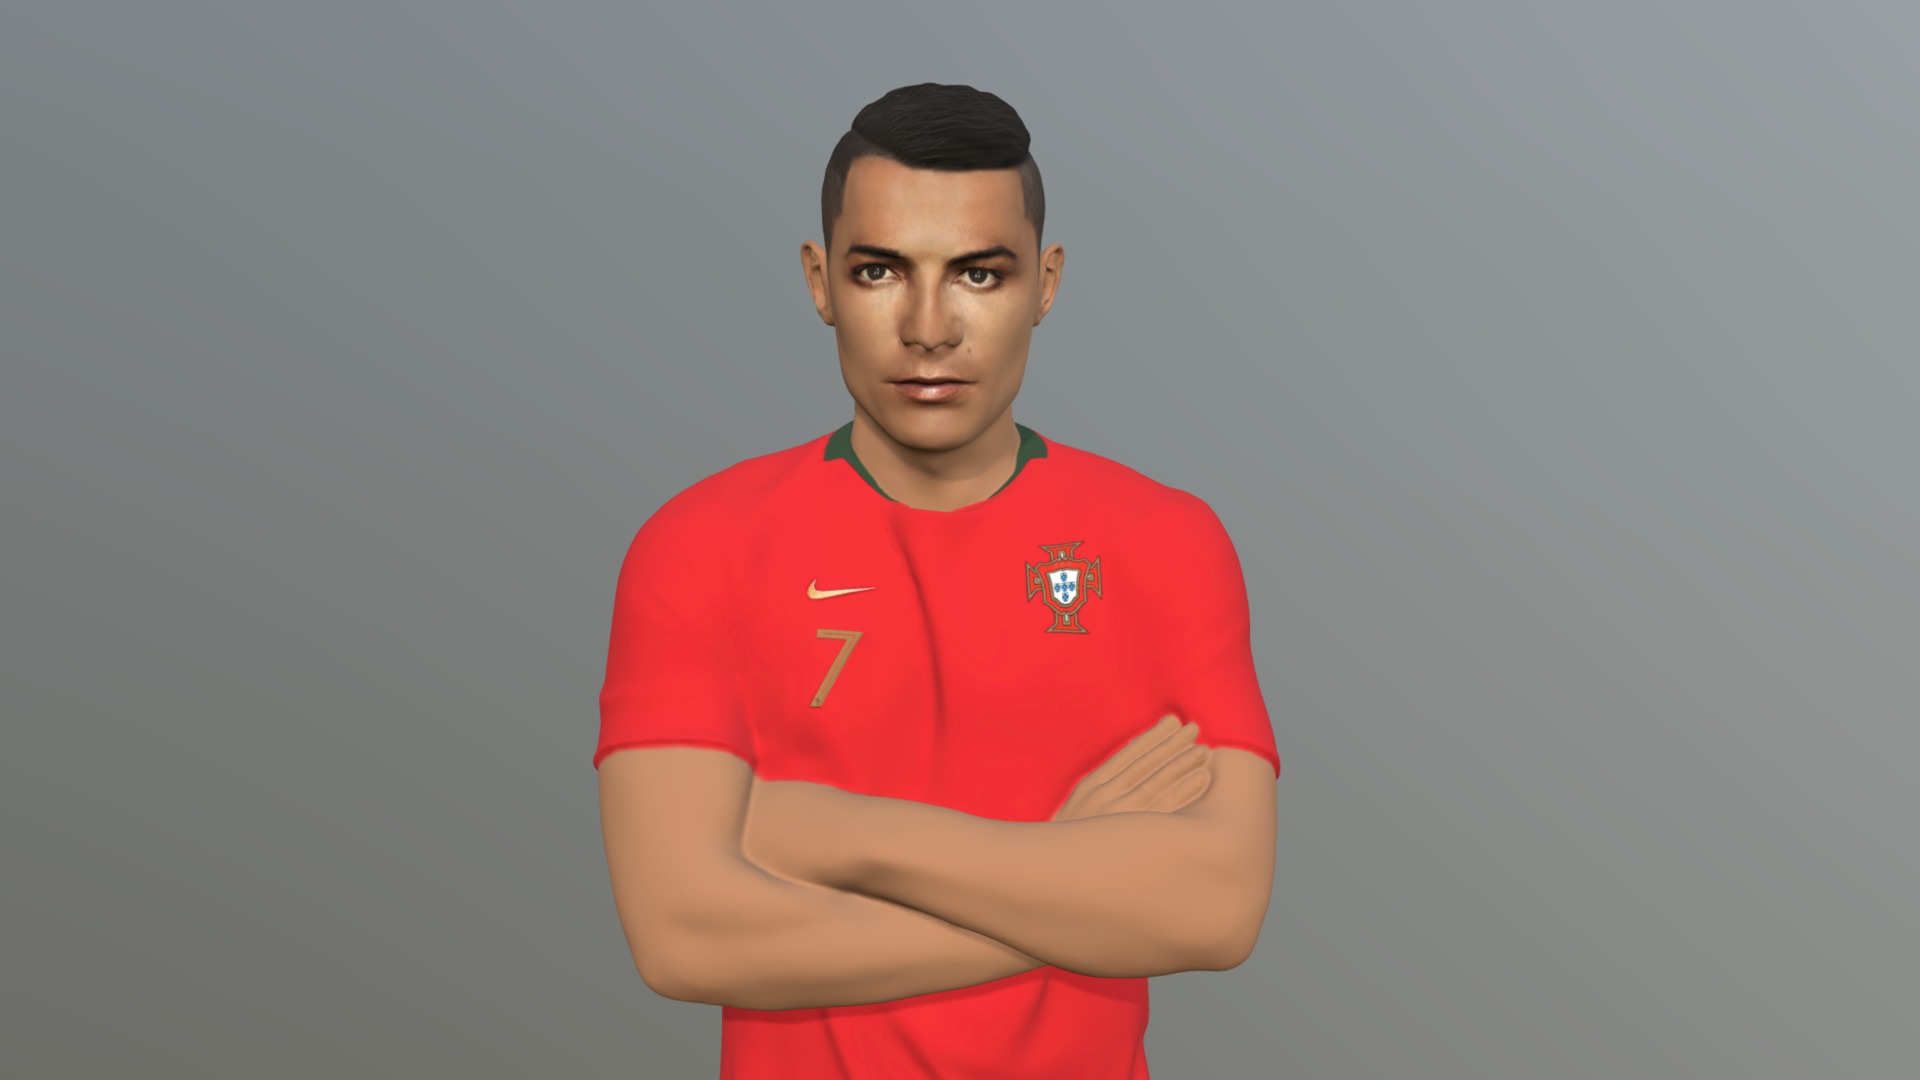 3D model Cristiano Ronaldo full color 3D printing - This is a 3D model of the Cristiano Ronaldo full color 3D printing. The 3D model is about a person in a red shirt.